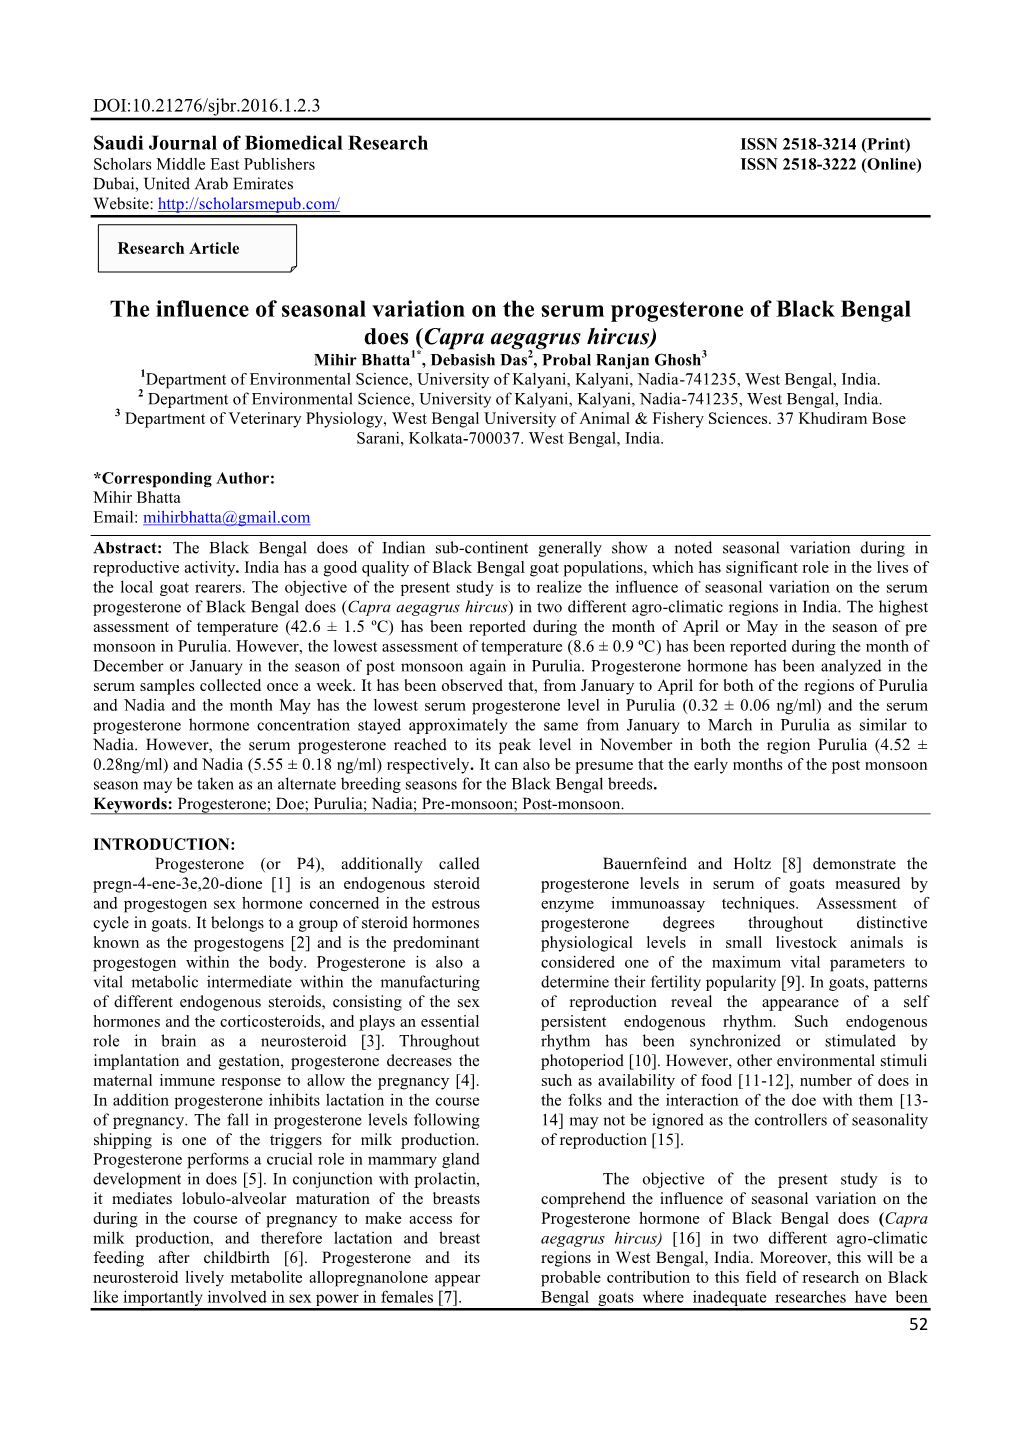 The Influence of Seasonal Variation on the Serum Progesterone of Black